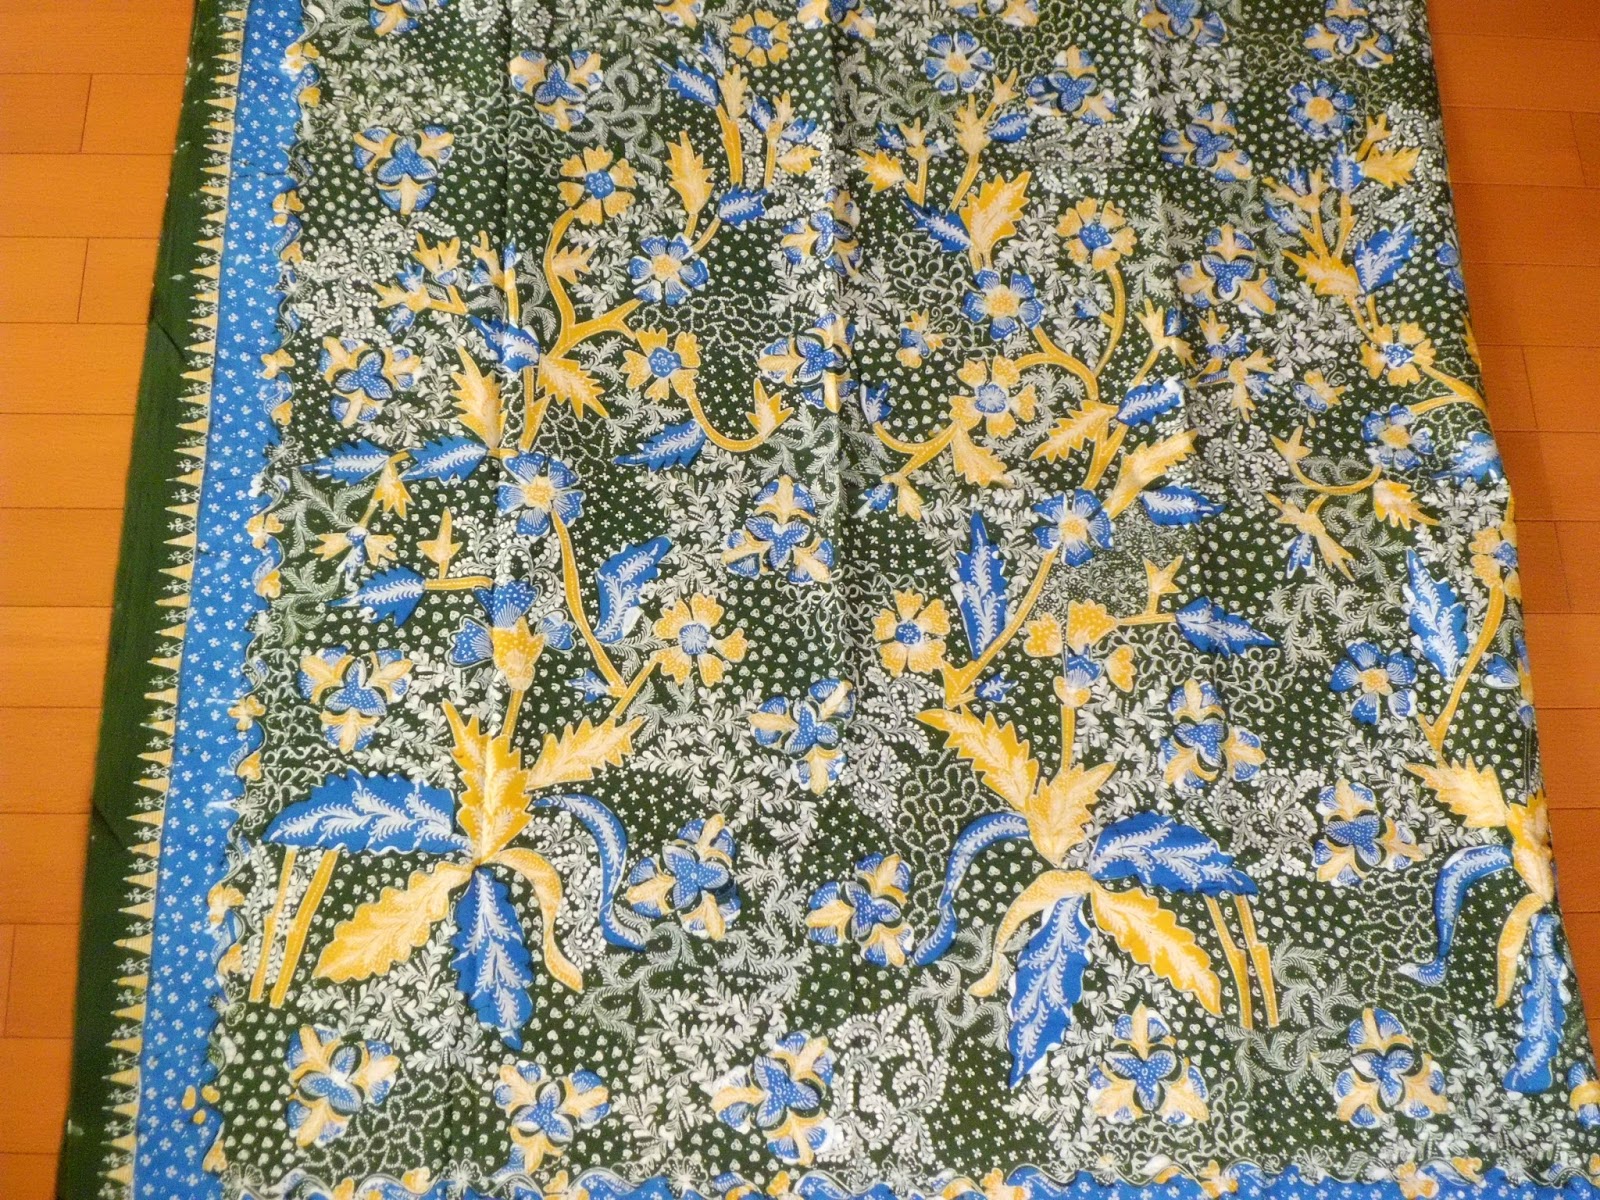 HandcraftKu Colorful Floral Indonesian Batik  Fabric  Cotton